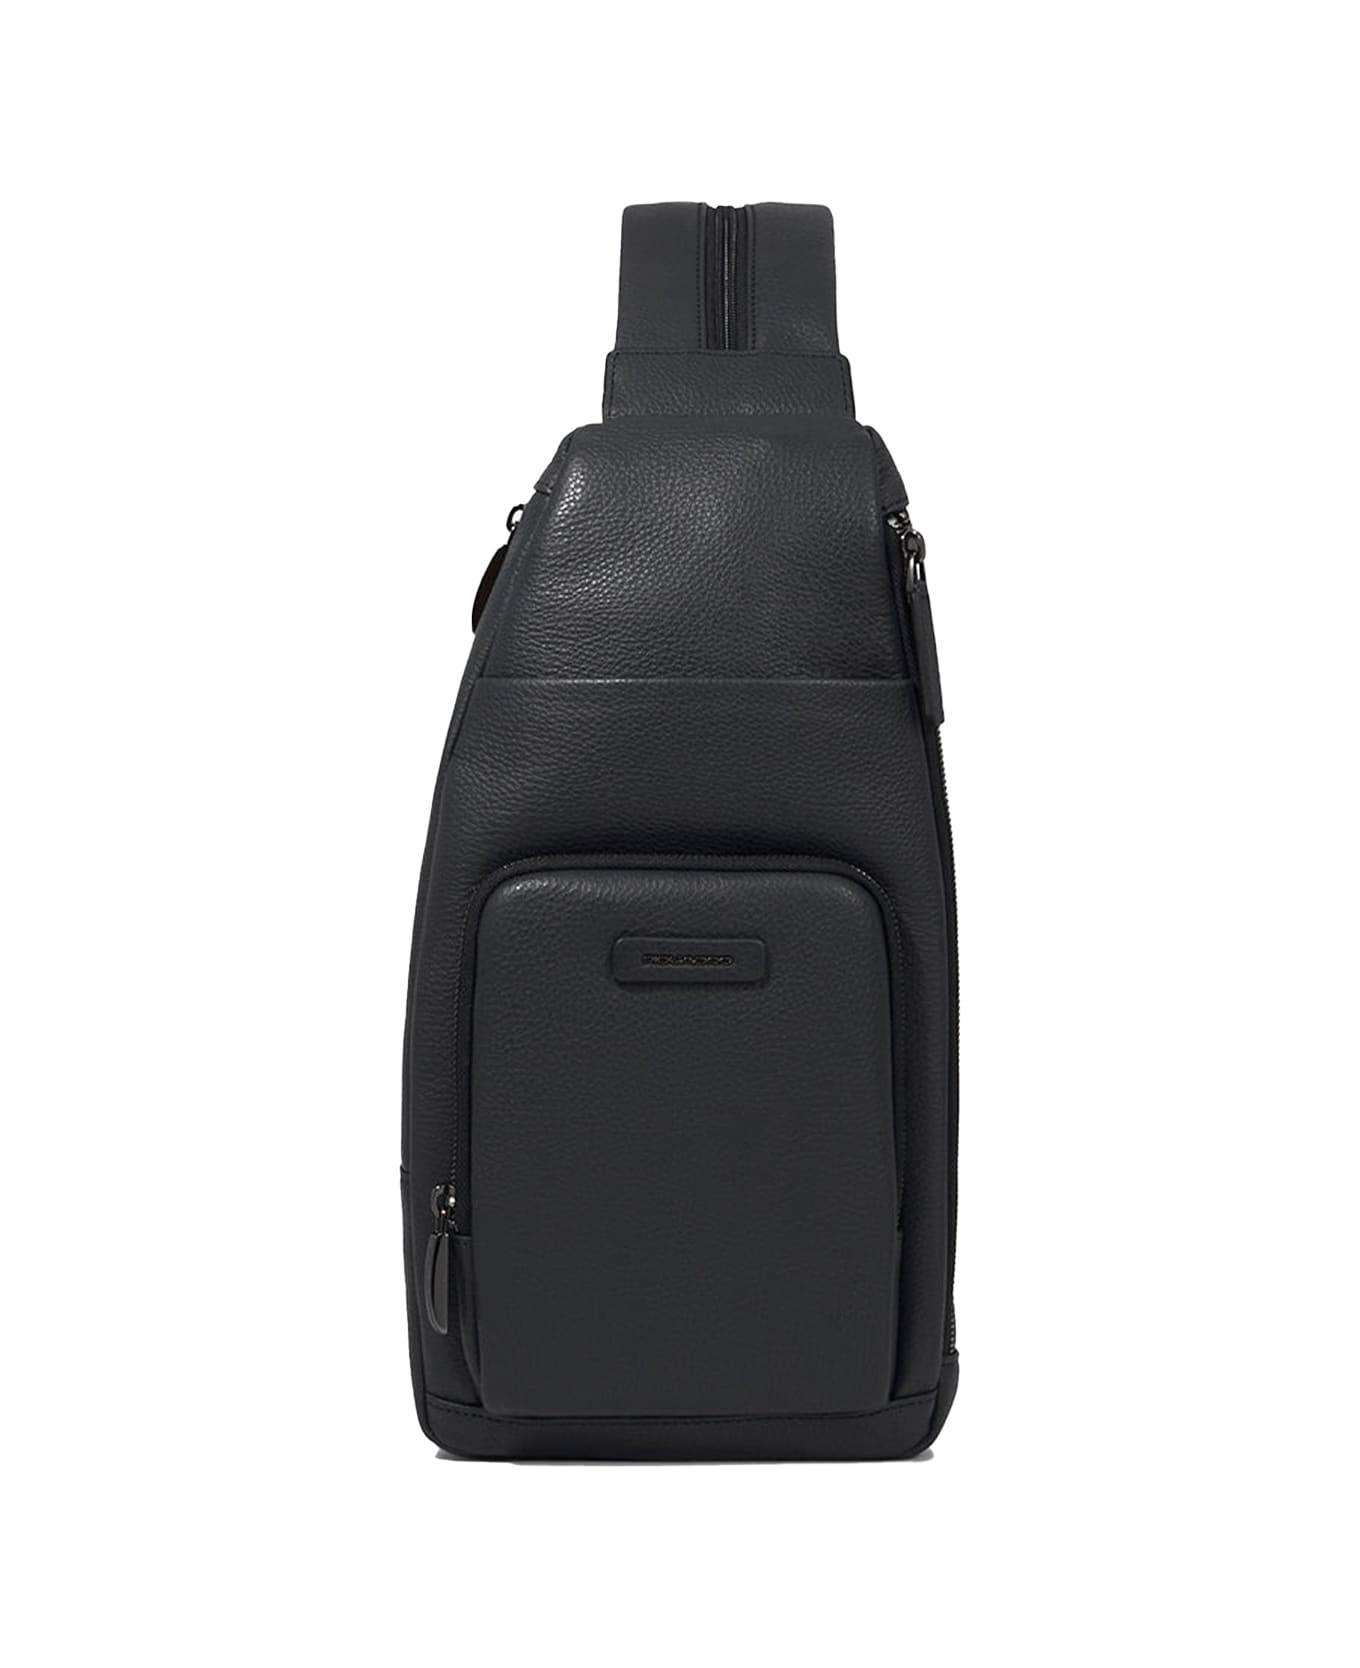 Piquadro Shoulder Bag For Ipad Mini, Portable As A Backpack - NERO